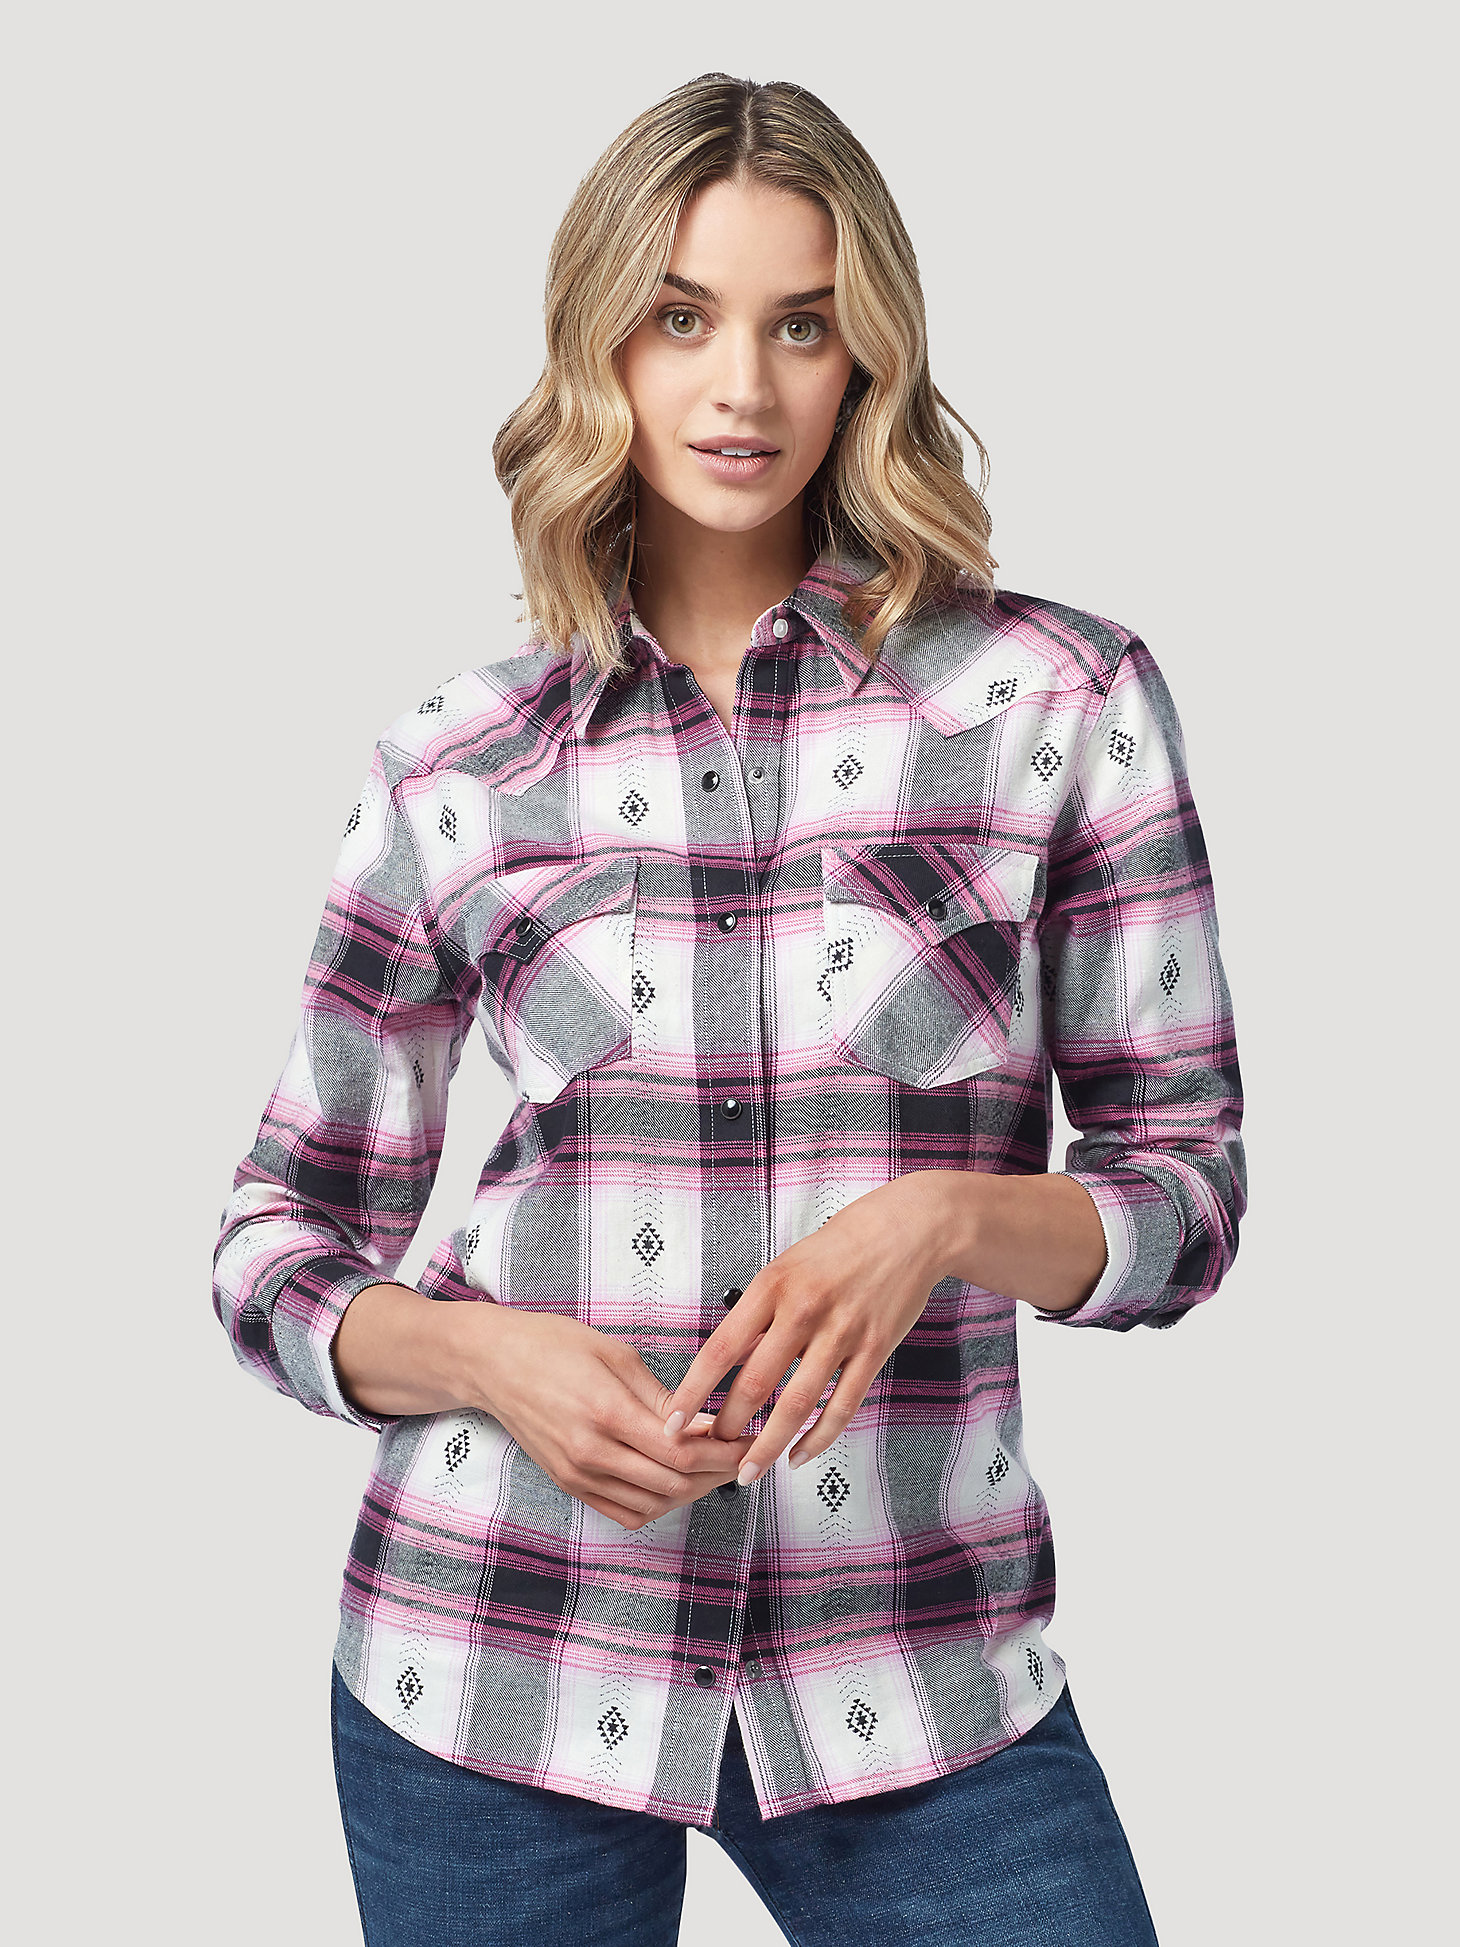 Women's Wrangler Retro® Long Sleeve Boyfriend Fit Flannel Plaid Shirt in Wren alternative view 2